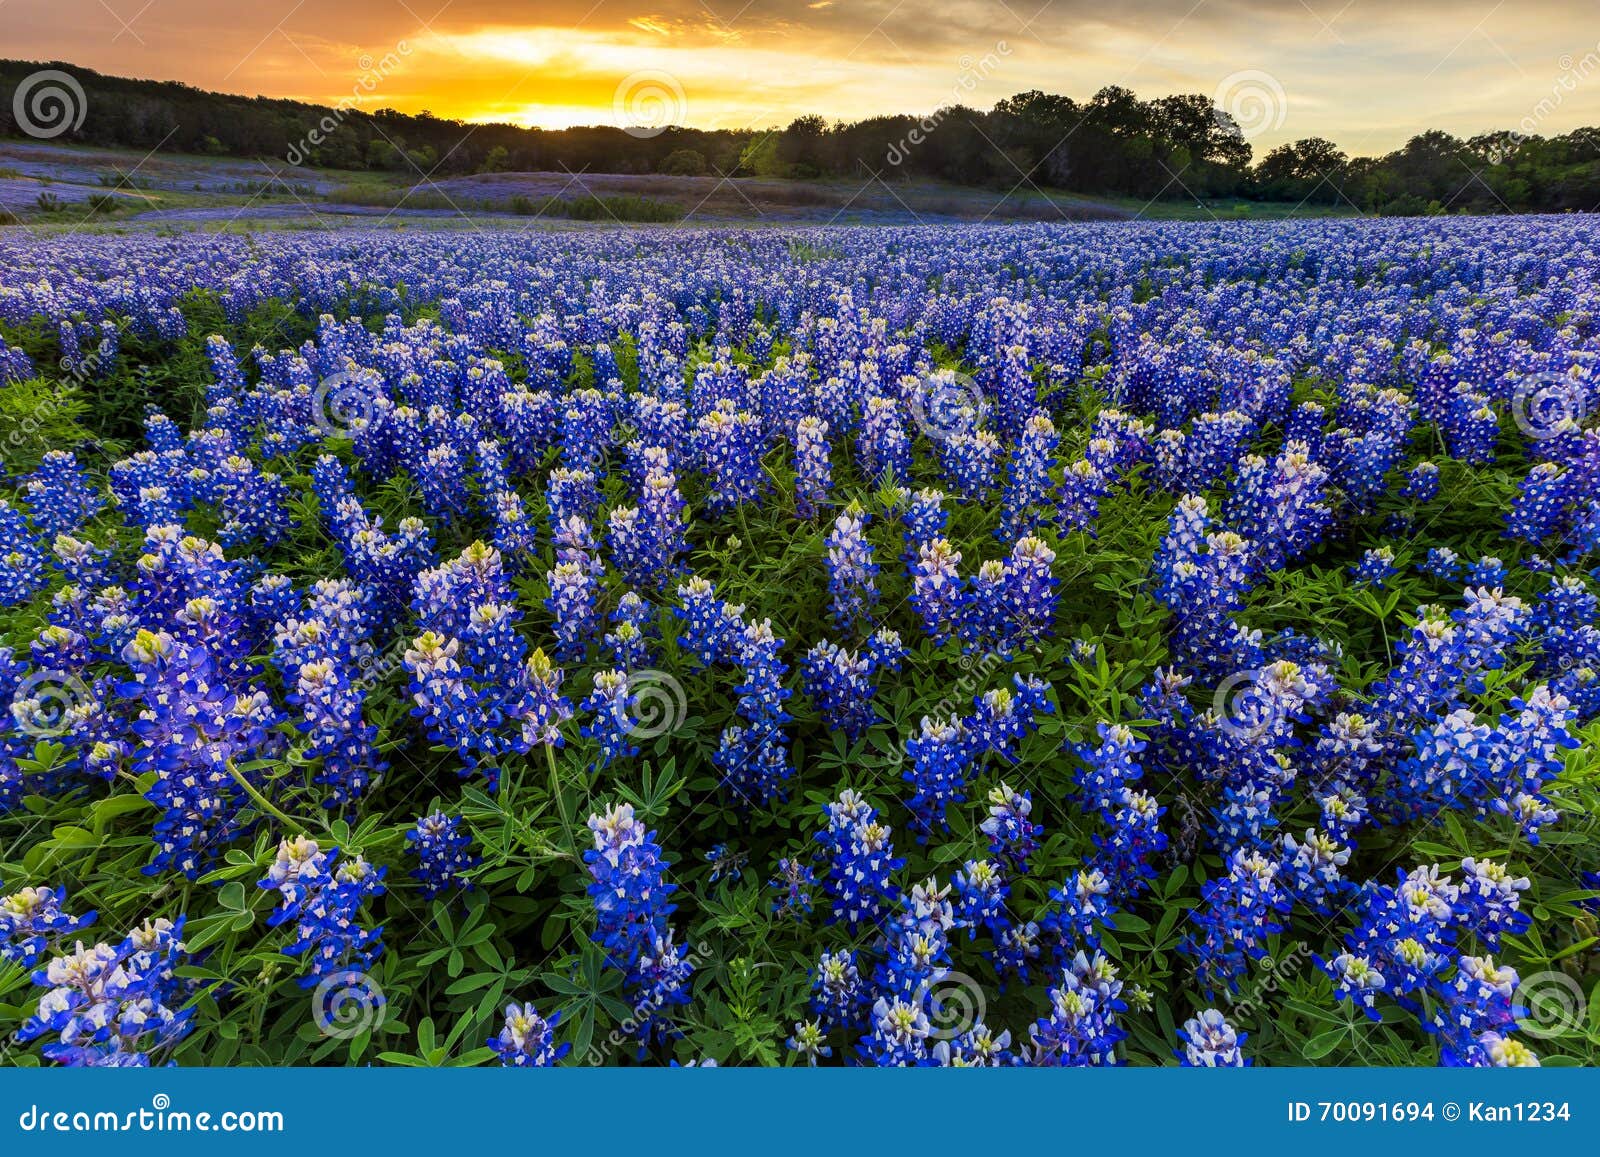 beautiful bluebonnets field at sunset near austin, texas in spri